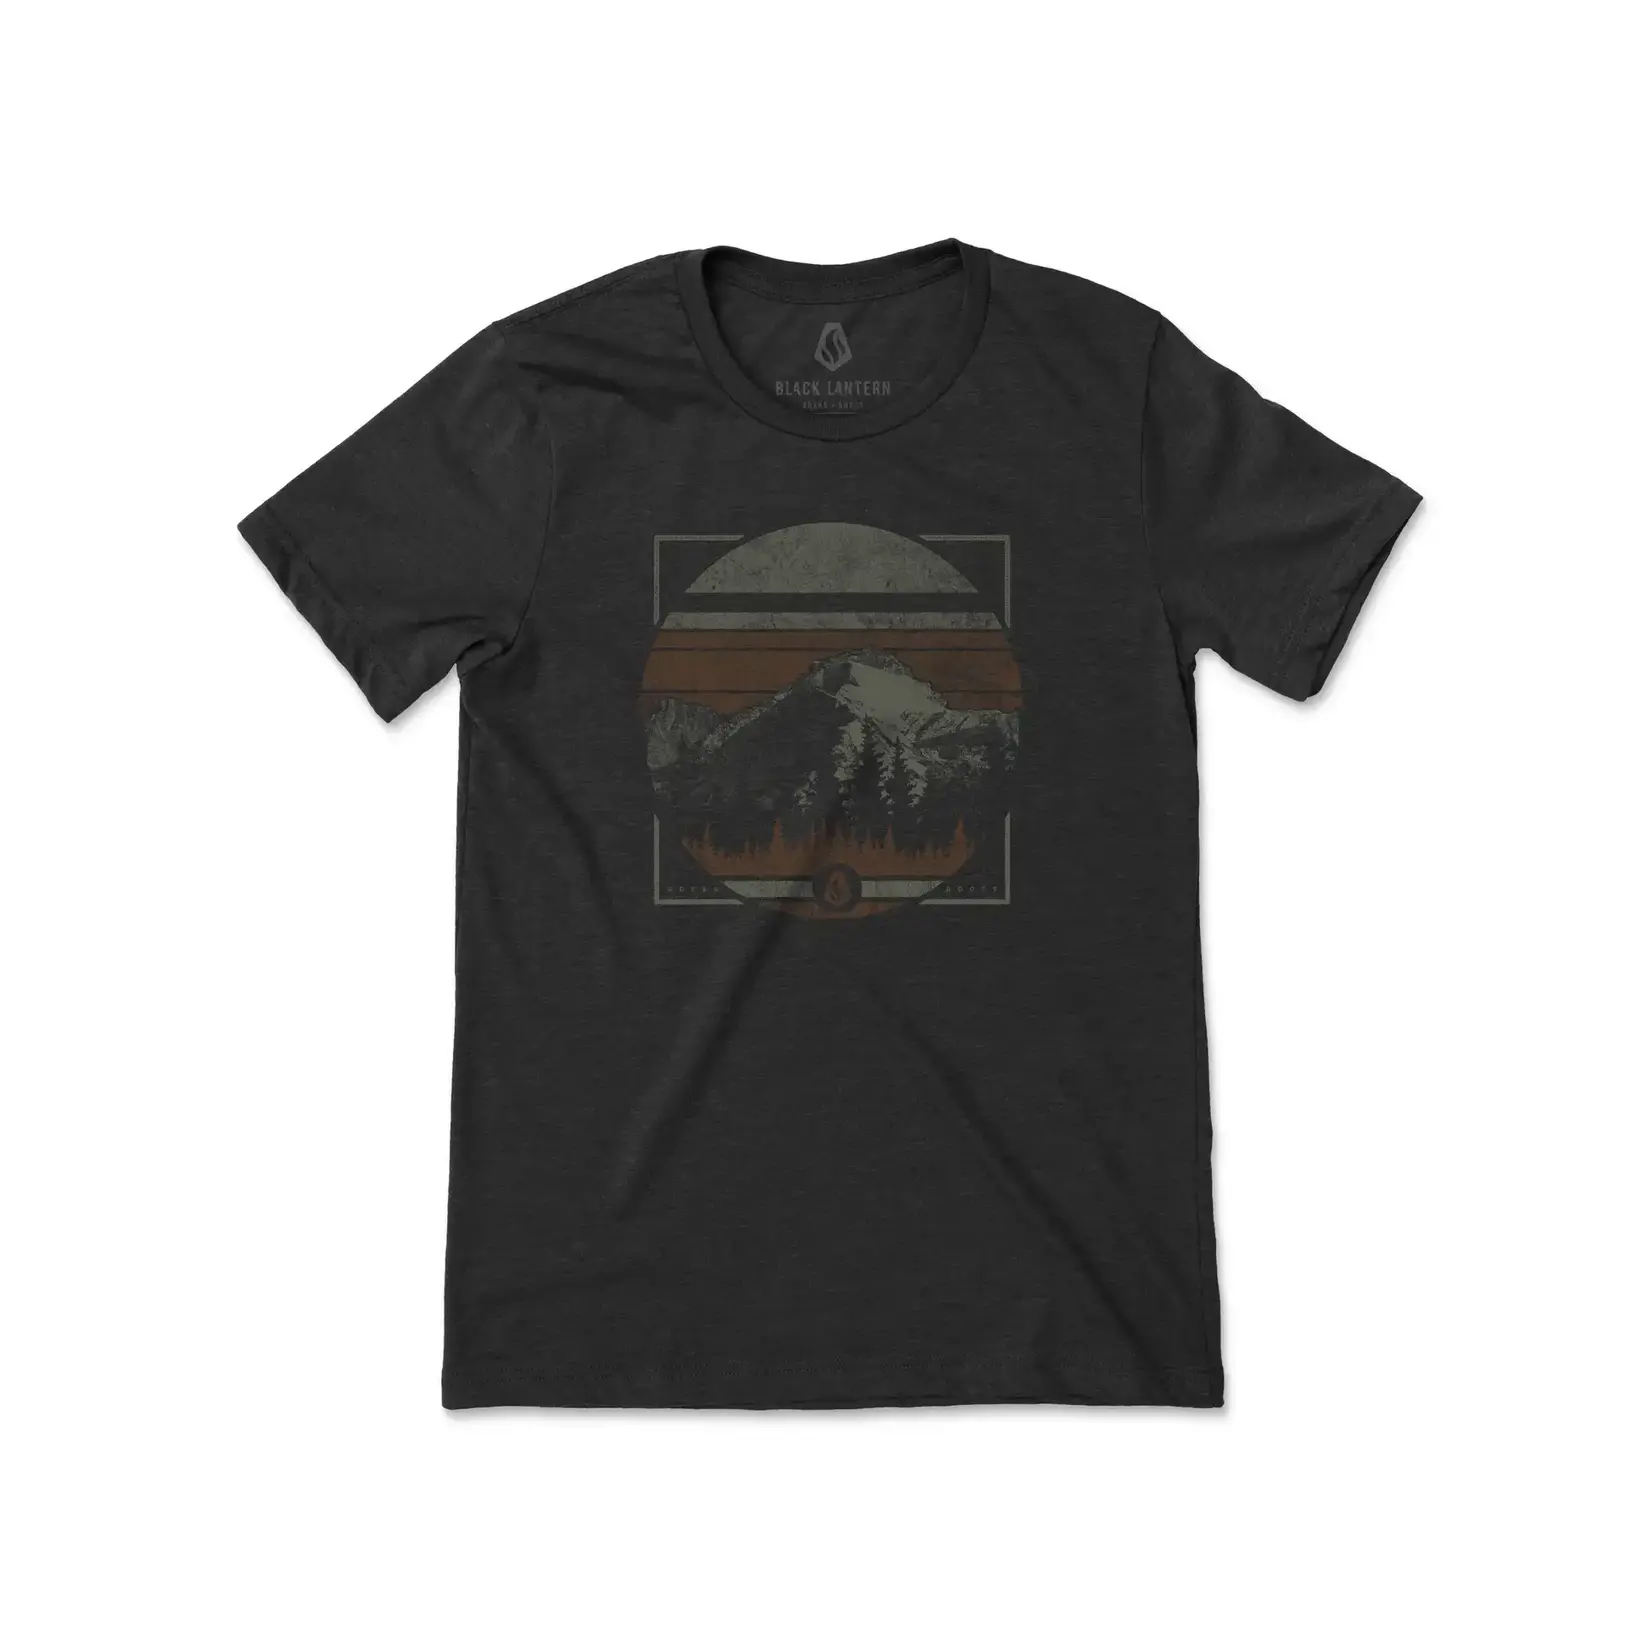 Black Lantern Rocks + Roots Vol. 3 T-Shirt